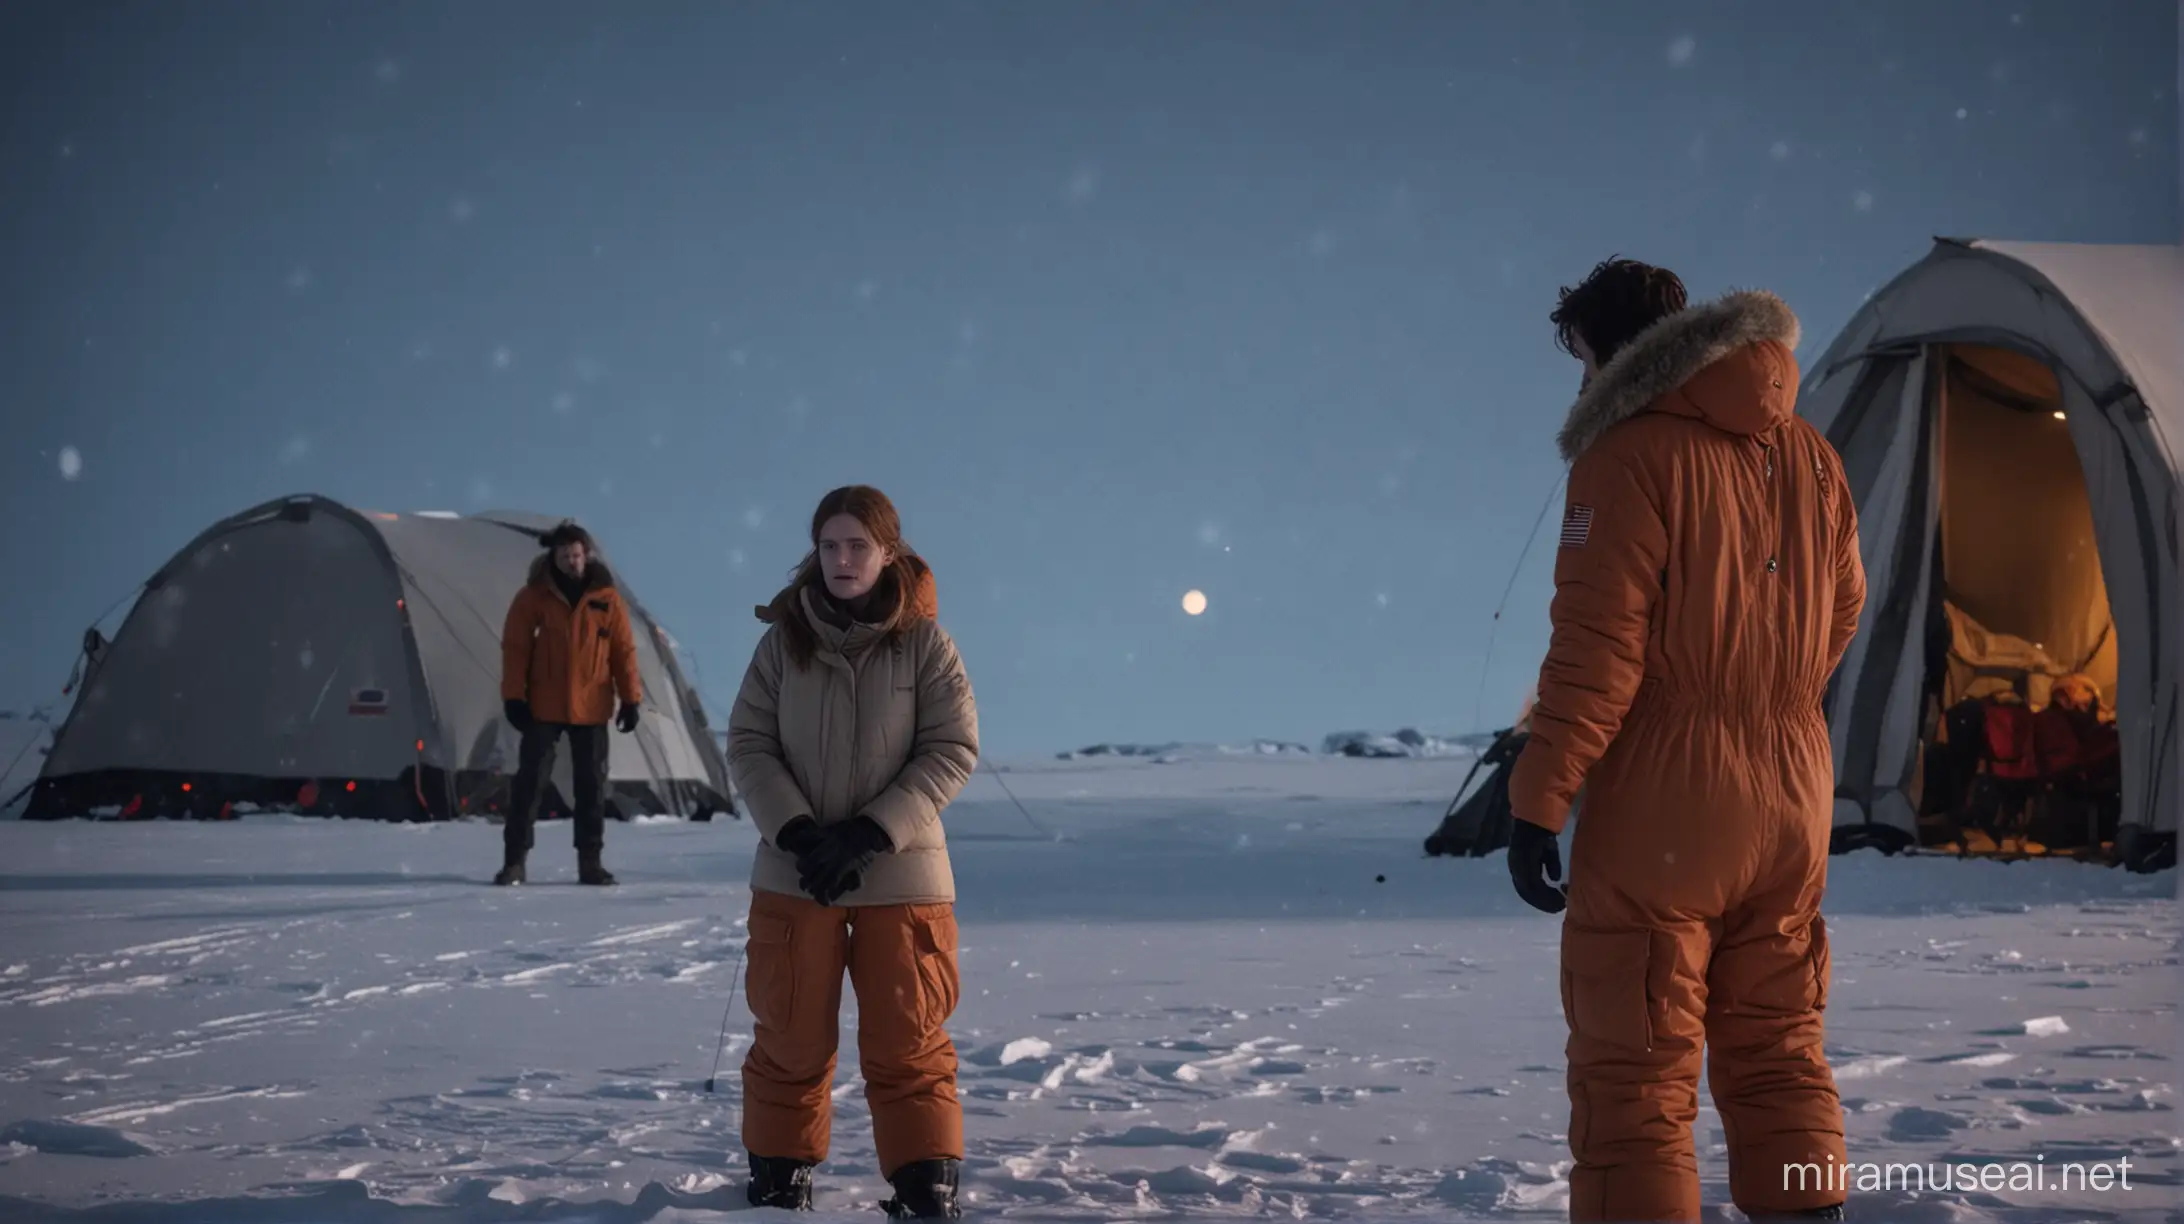 cinematic still, film by john carpenter, the thing, antarctica, night, snowstorm, tent, pedro pascal, rose leslie, snowsuit, talking